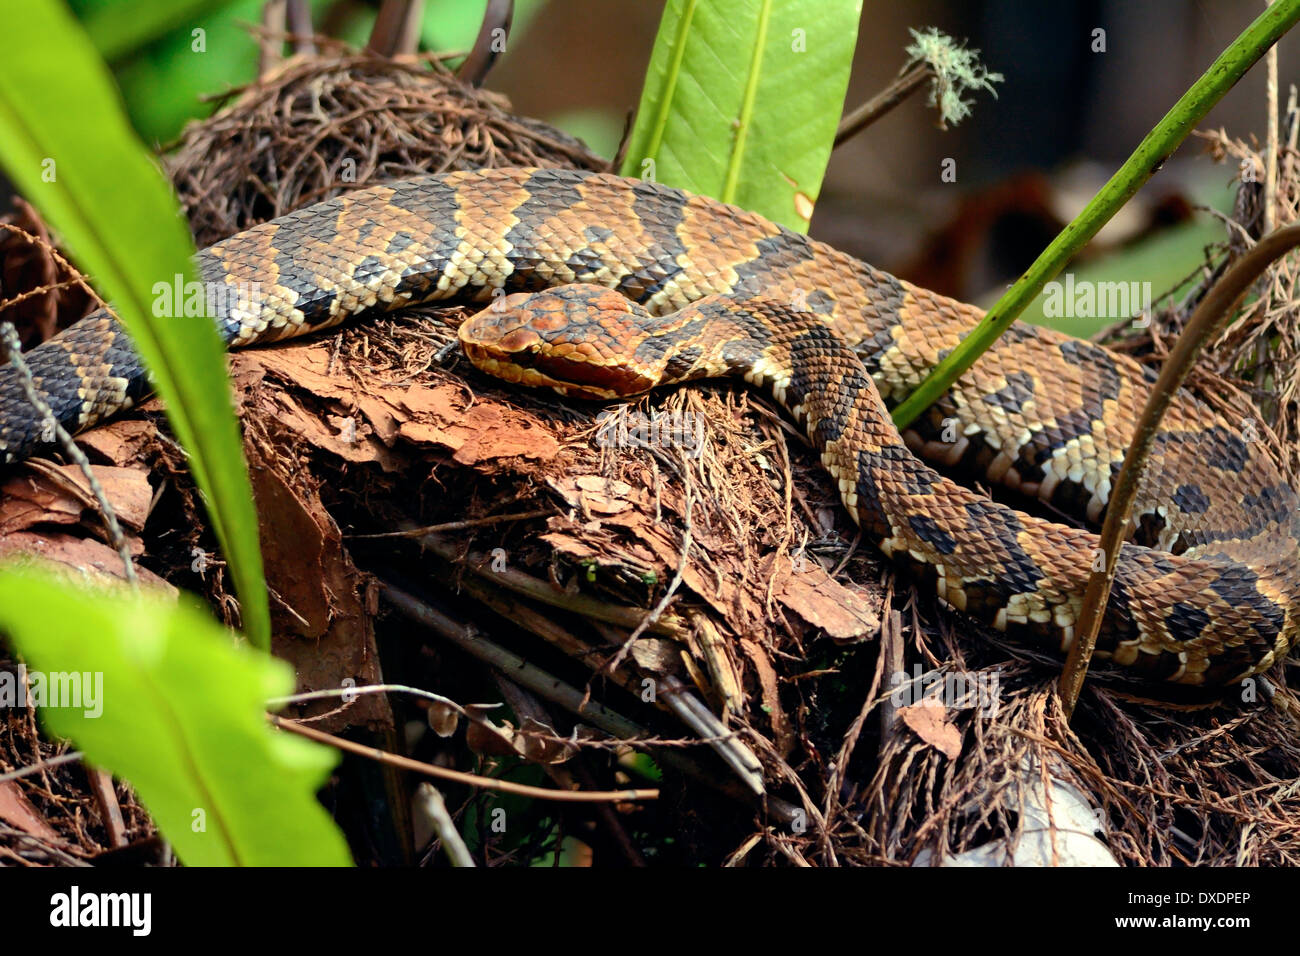 Cottonmouth pit viper (water moccasin) - Agkistrodon piscivorus Stock Photo